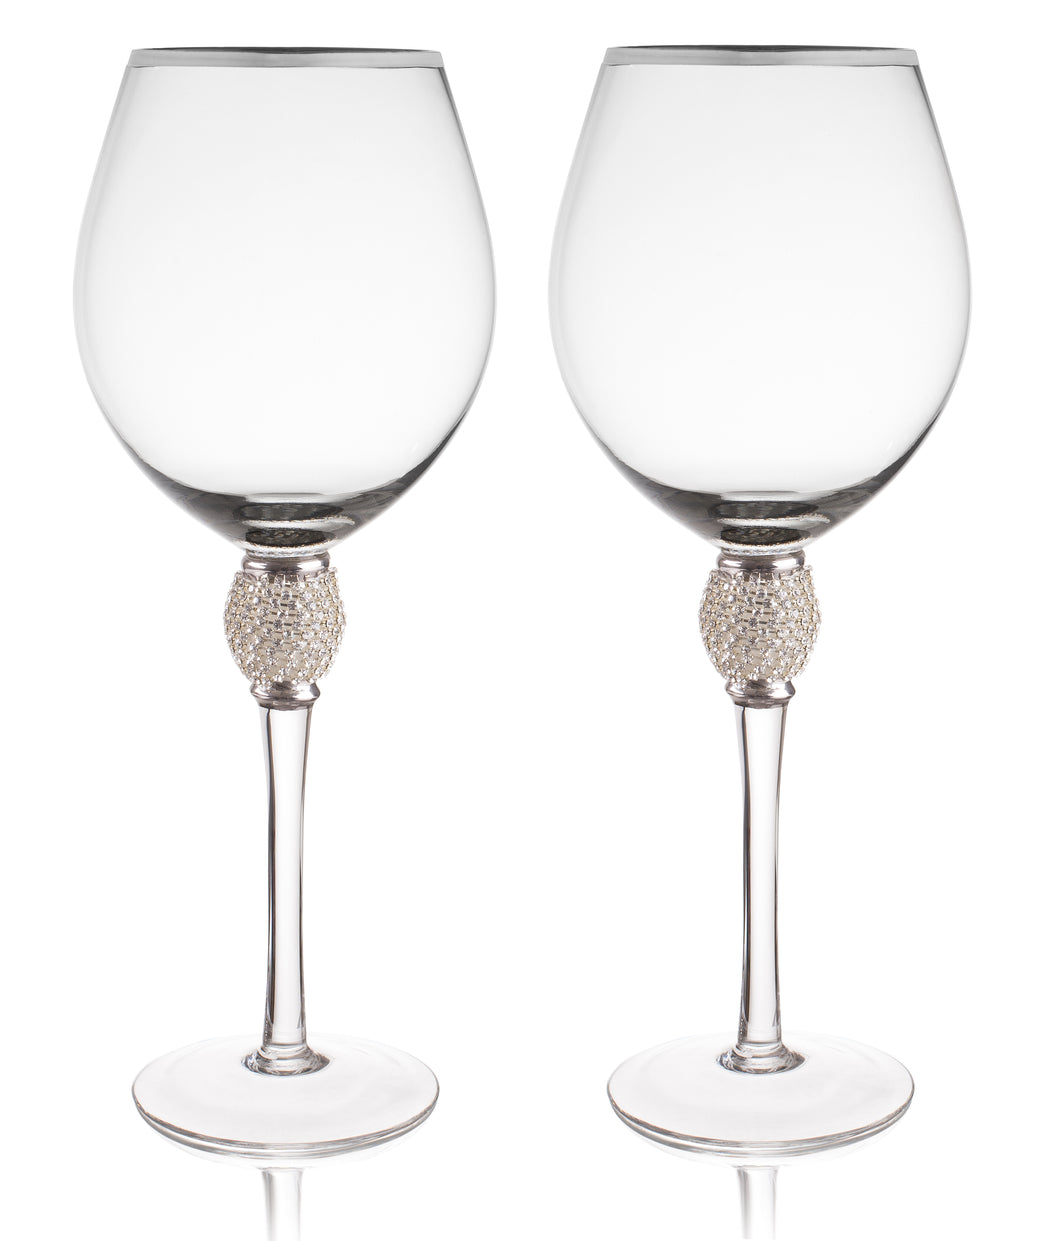 Set of 2 Wine Glasses - Rhinestone 